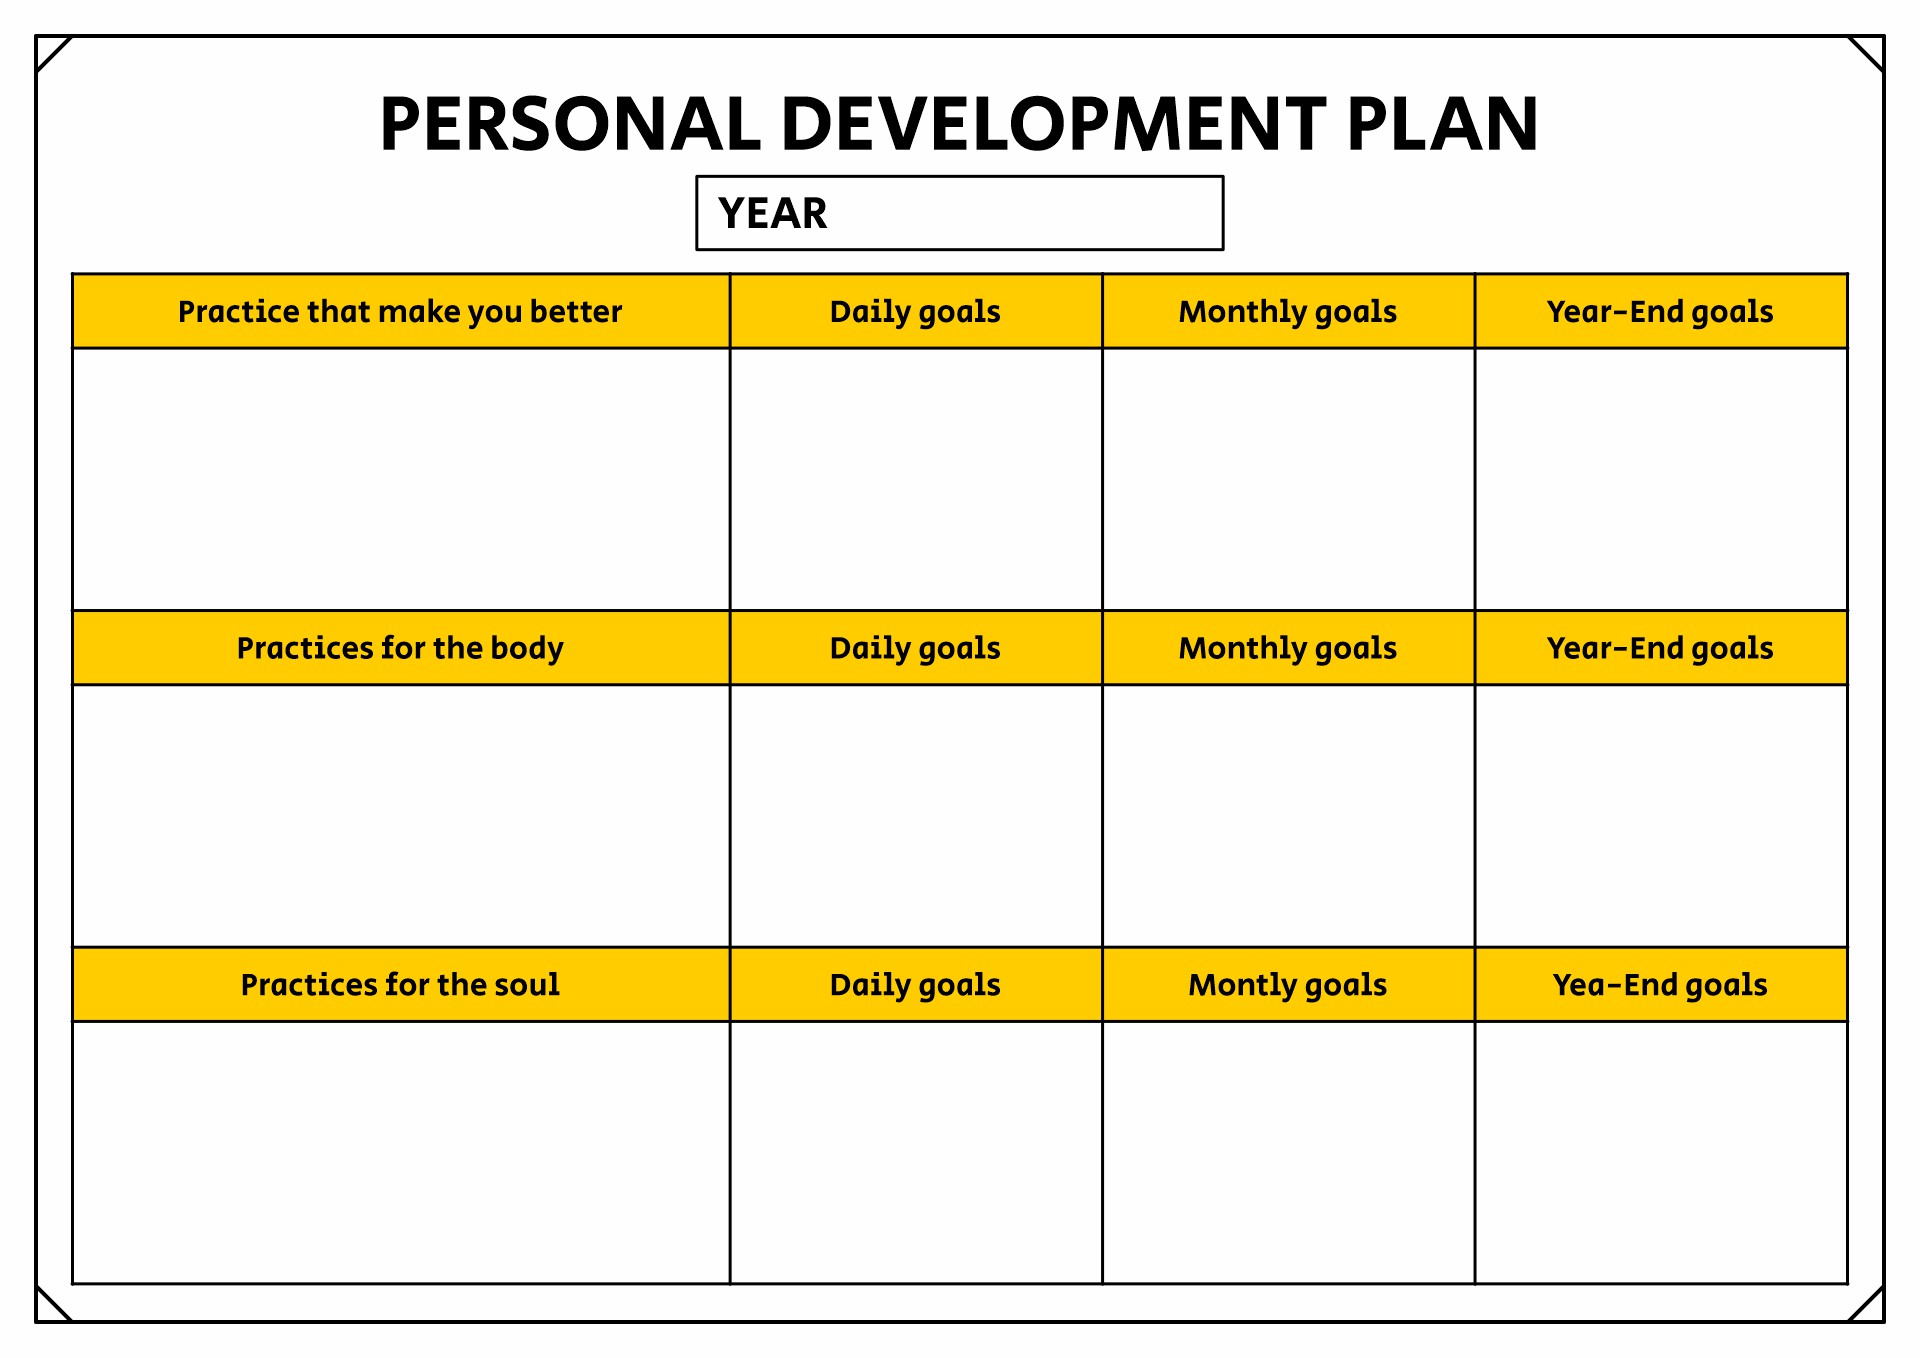 Sample Personal Development Plan Template